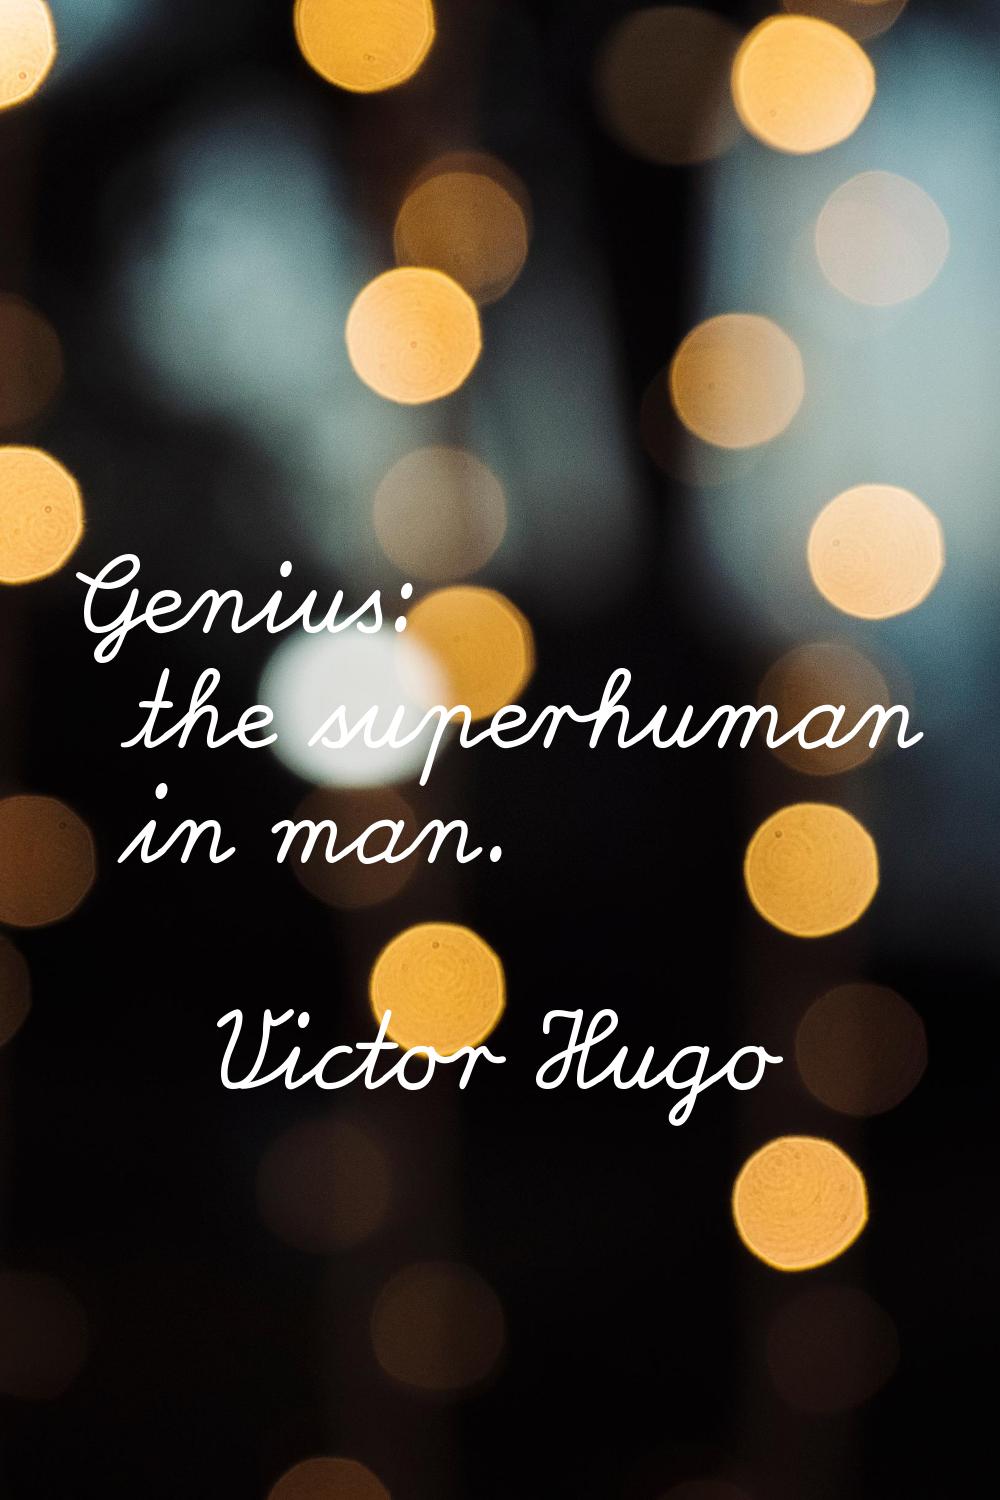 Genius: the superhuman in man.